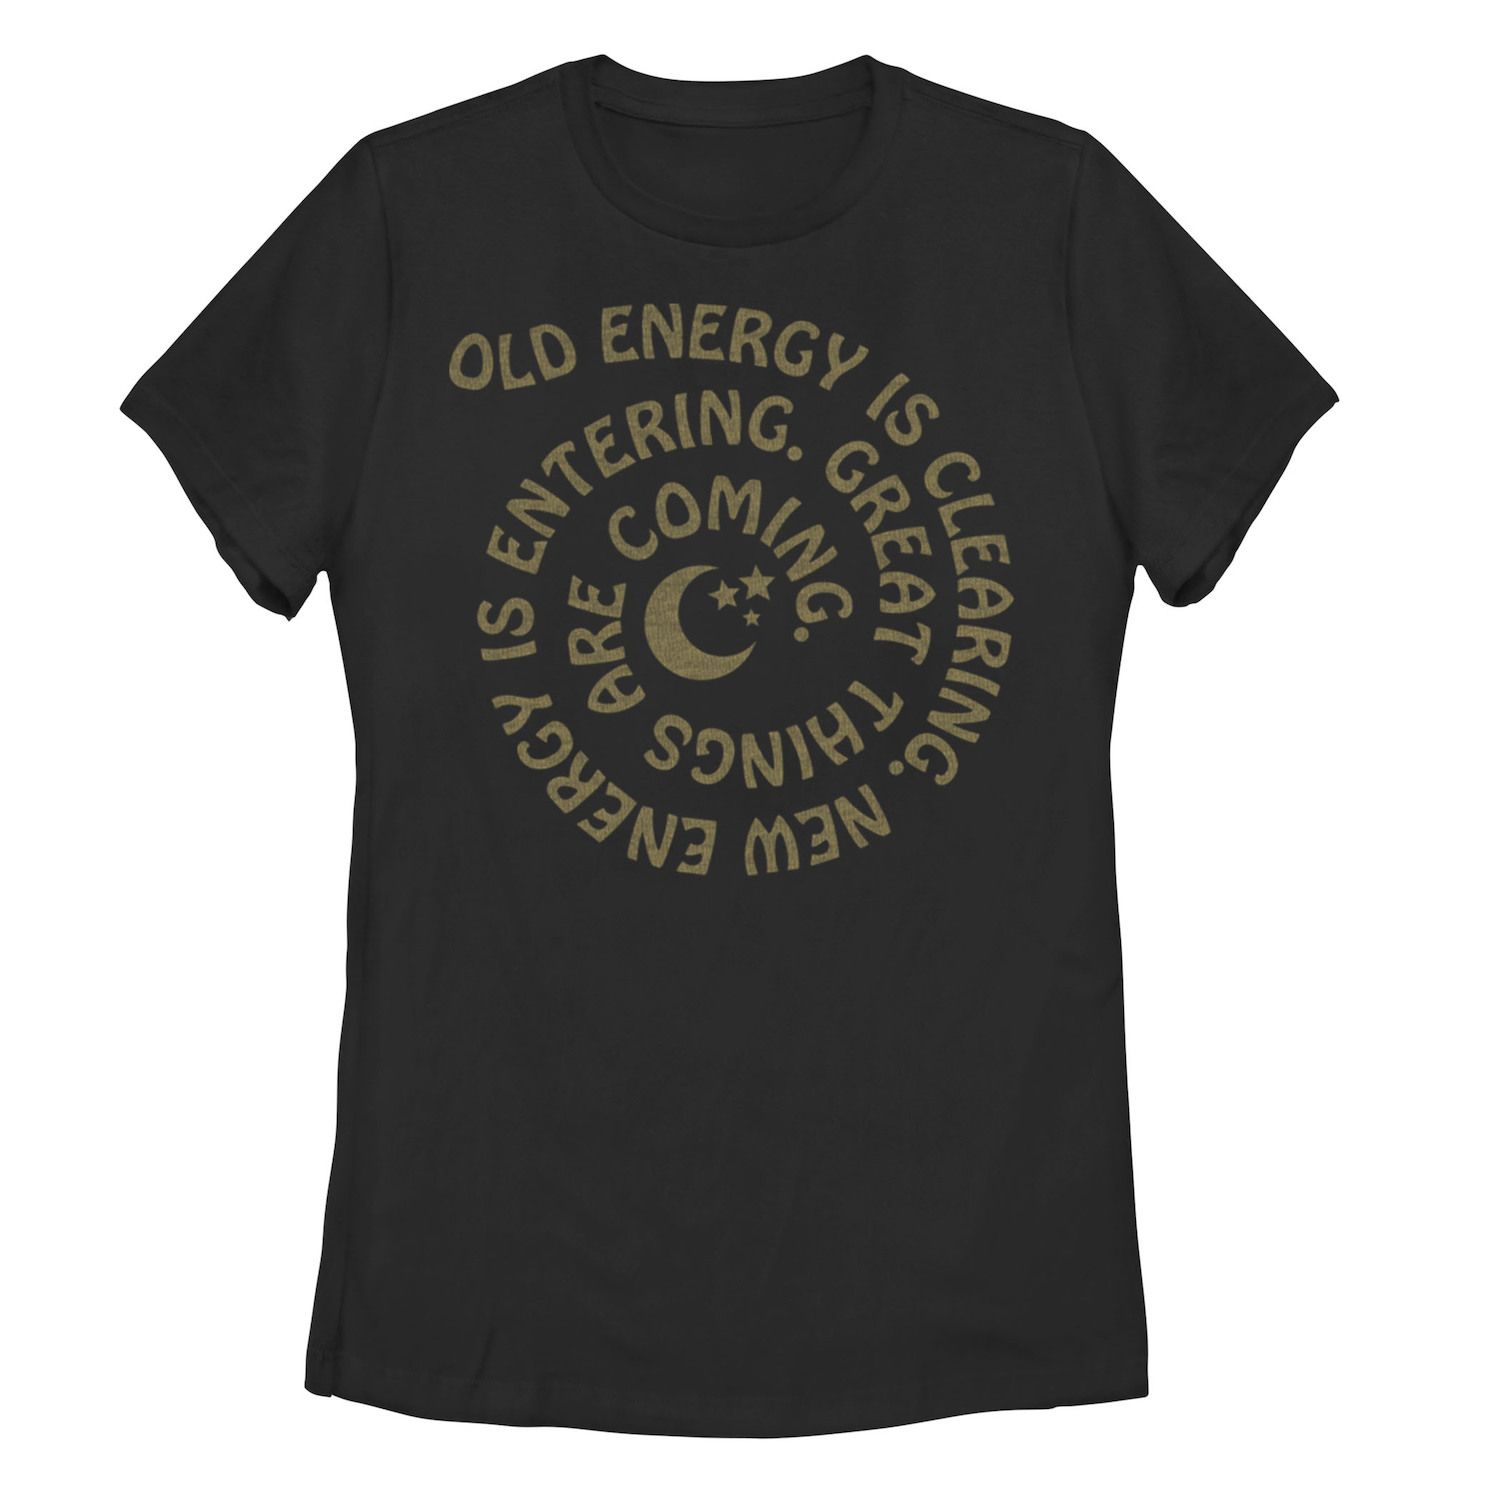 Юниорская футболка Old Energy New Energy со спиральным рисунком